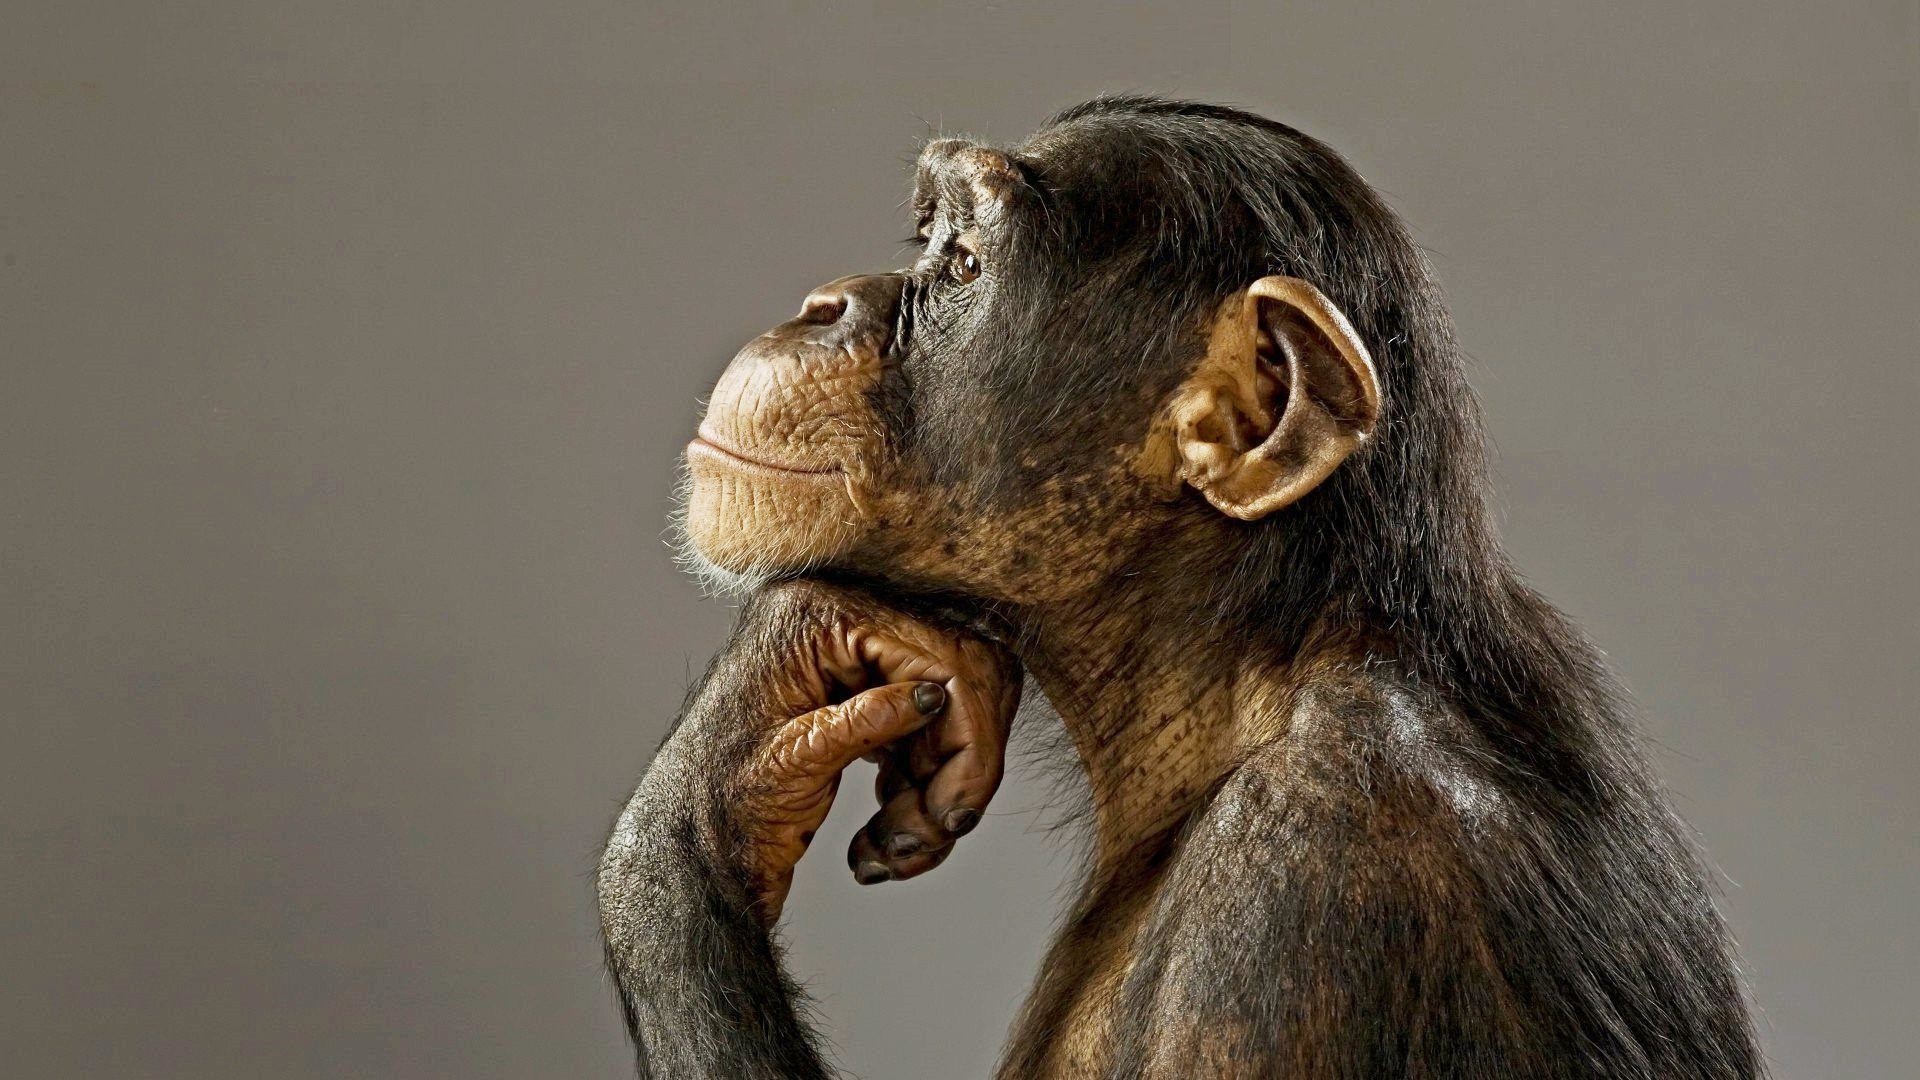 Chimpanzee in the wild, Chimpanzee portrait, Primate intelligence, Jungle habitat, 1920x1080 Full HD Desktop